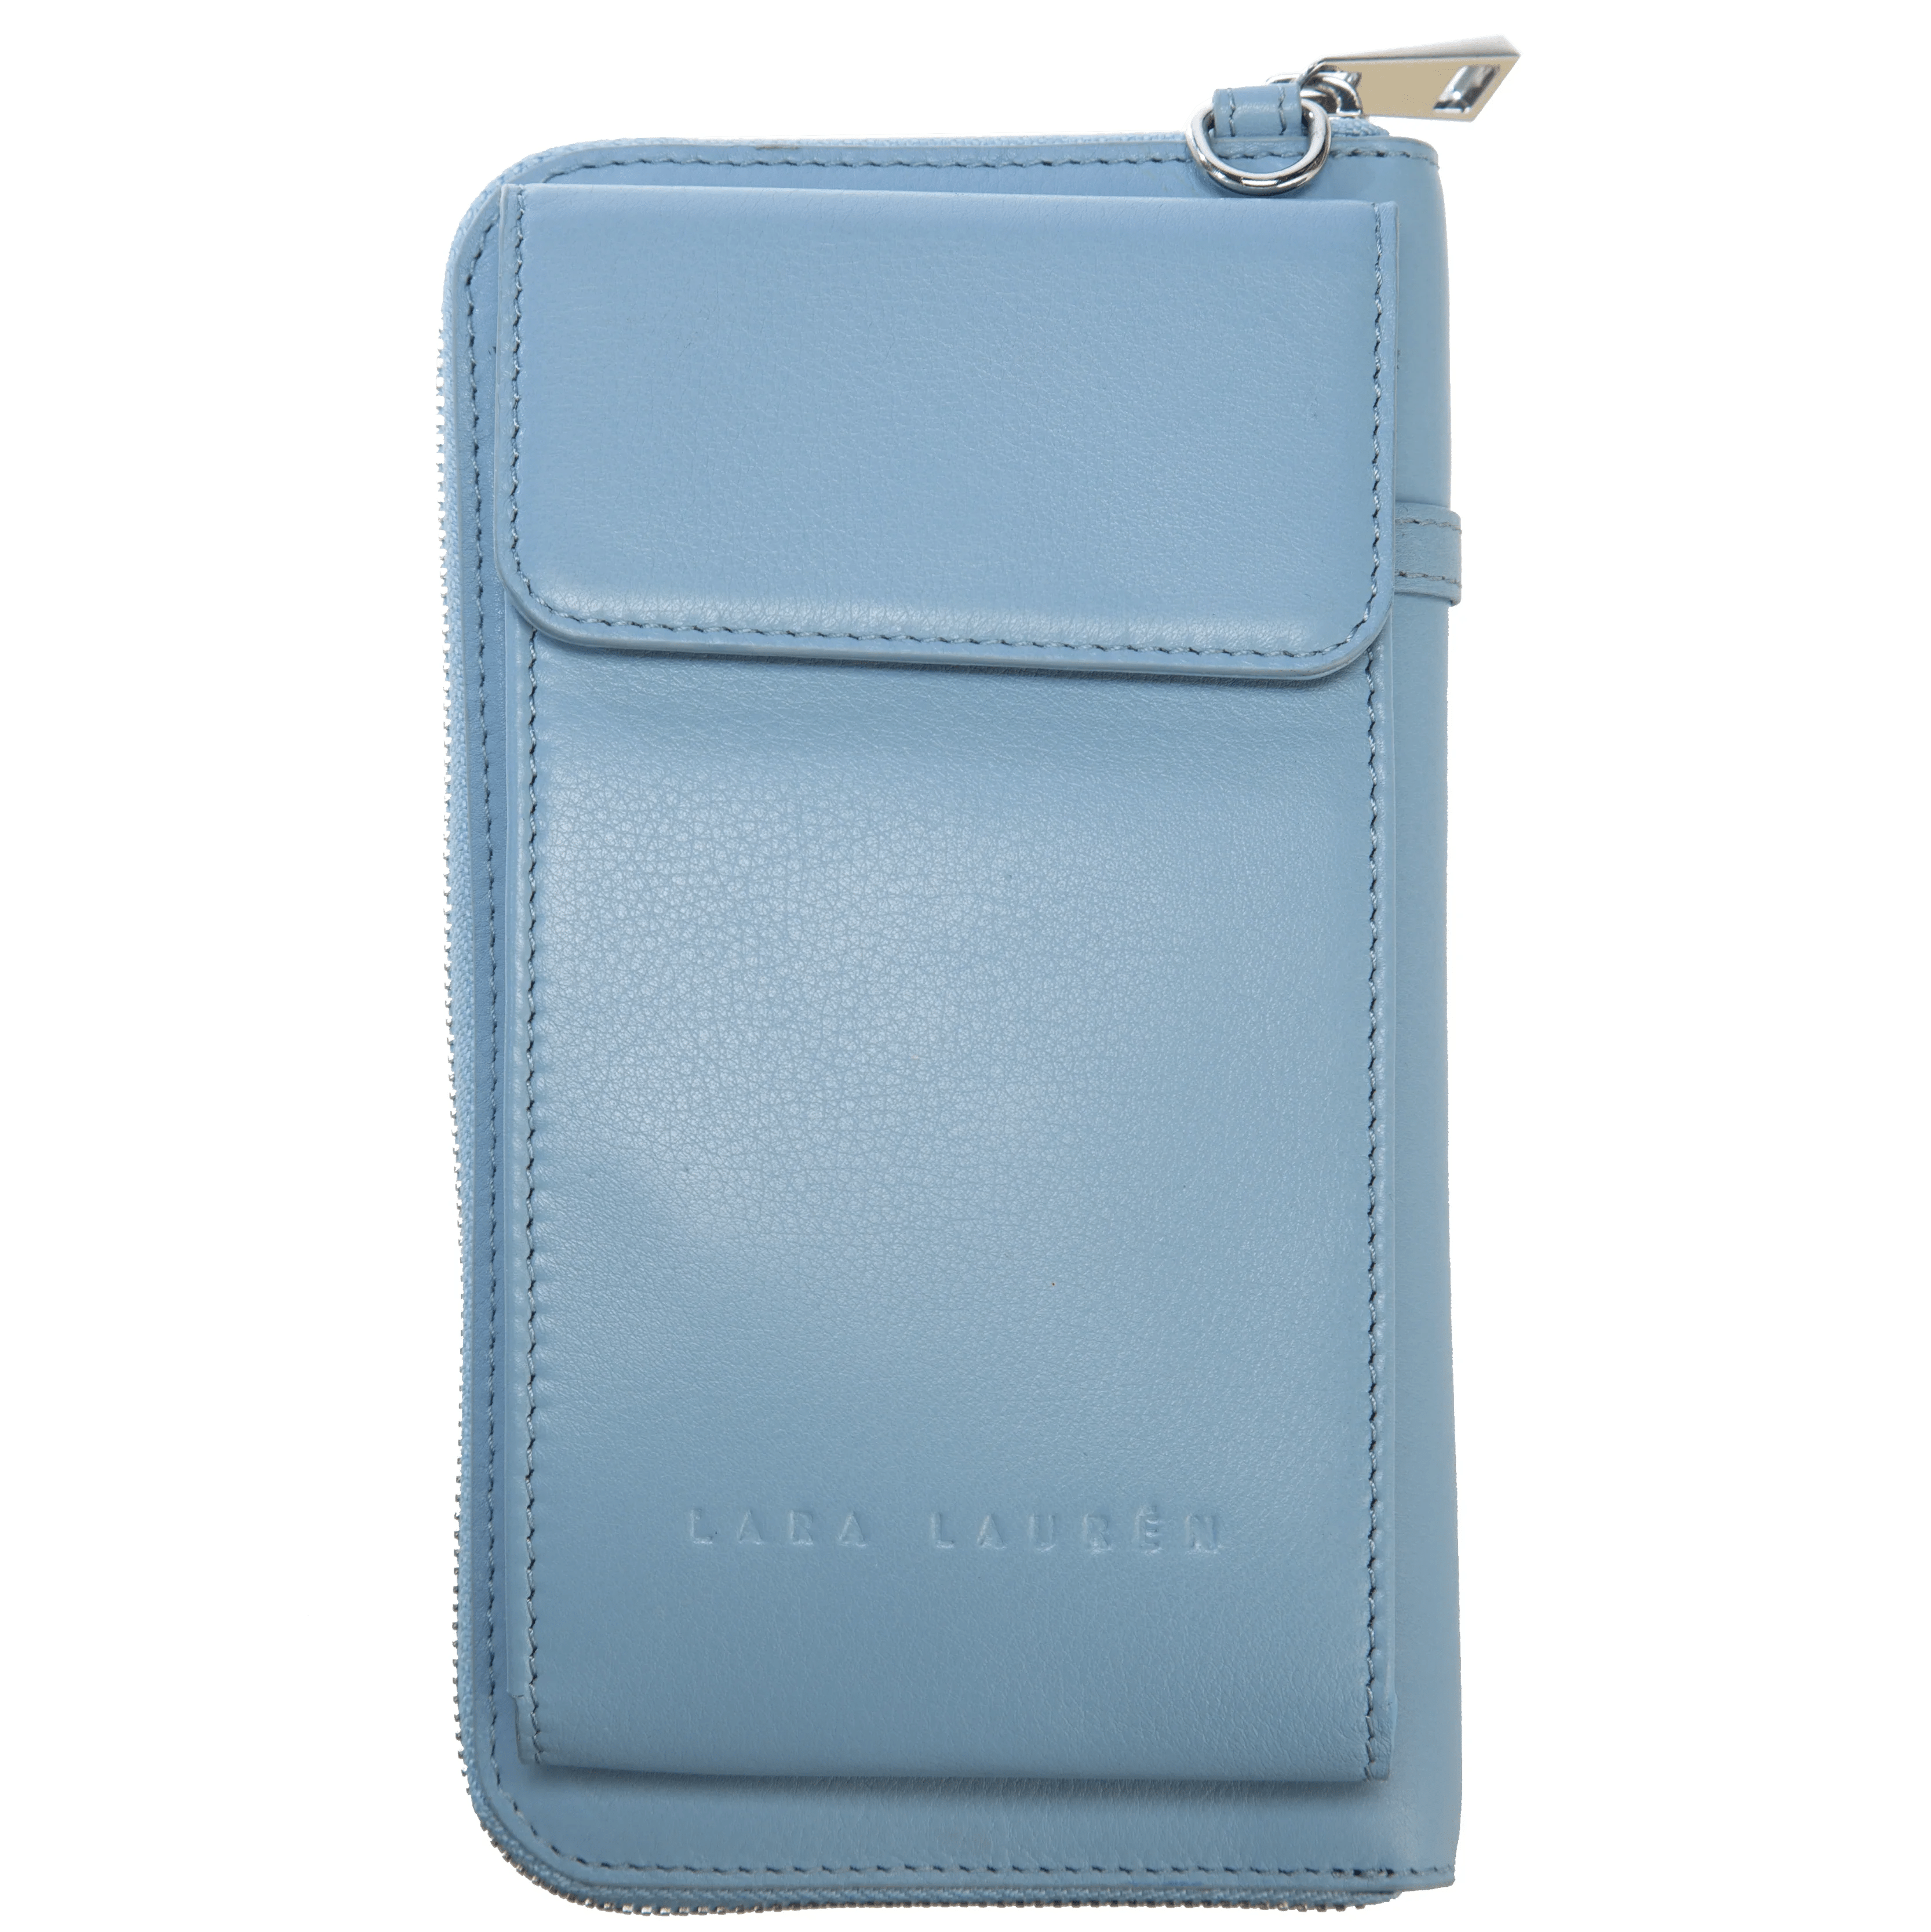 Lara Lauren City Wallet A Mobile Bag 20 cm - bleu